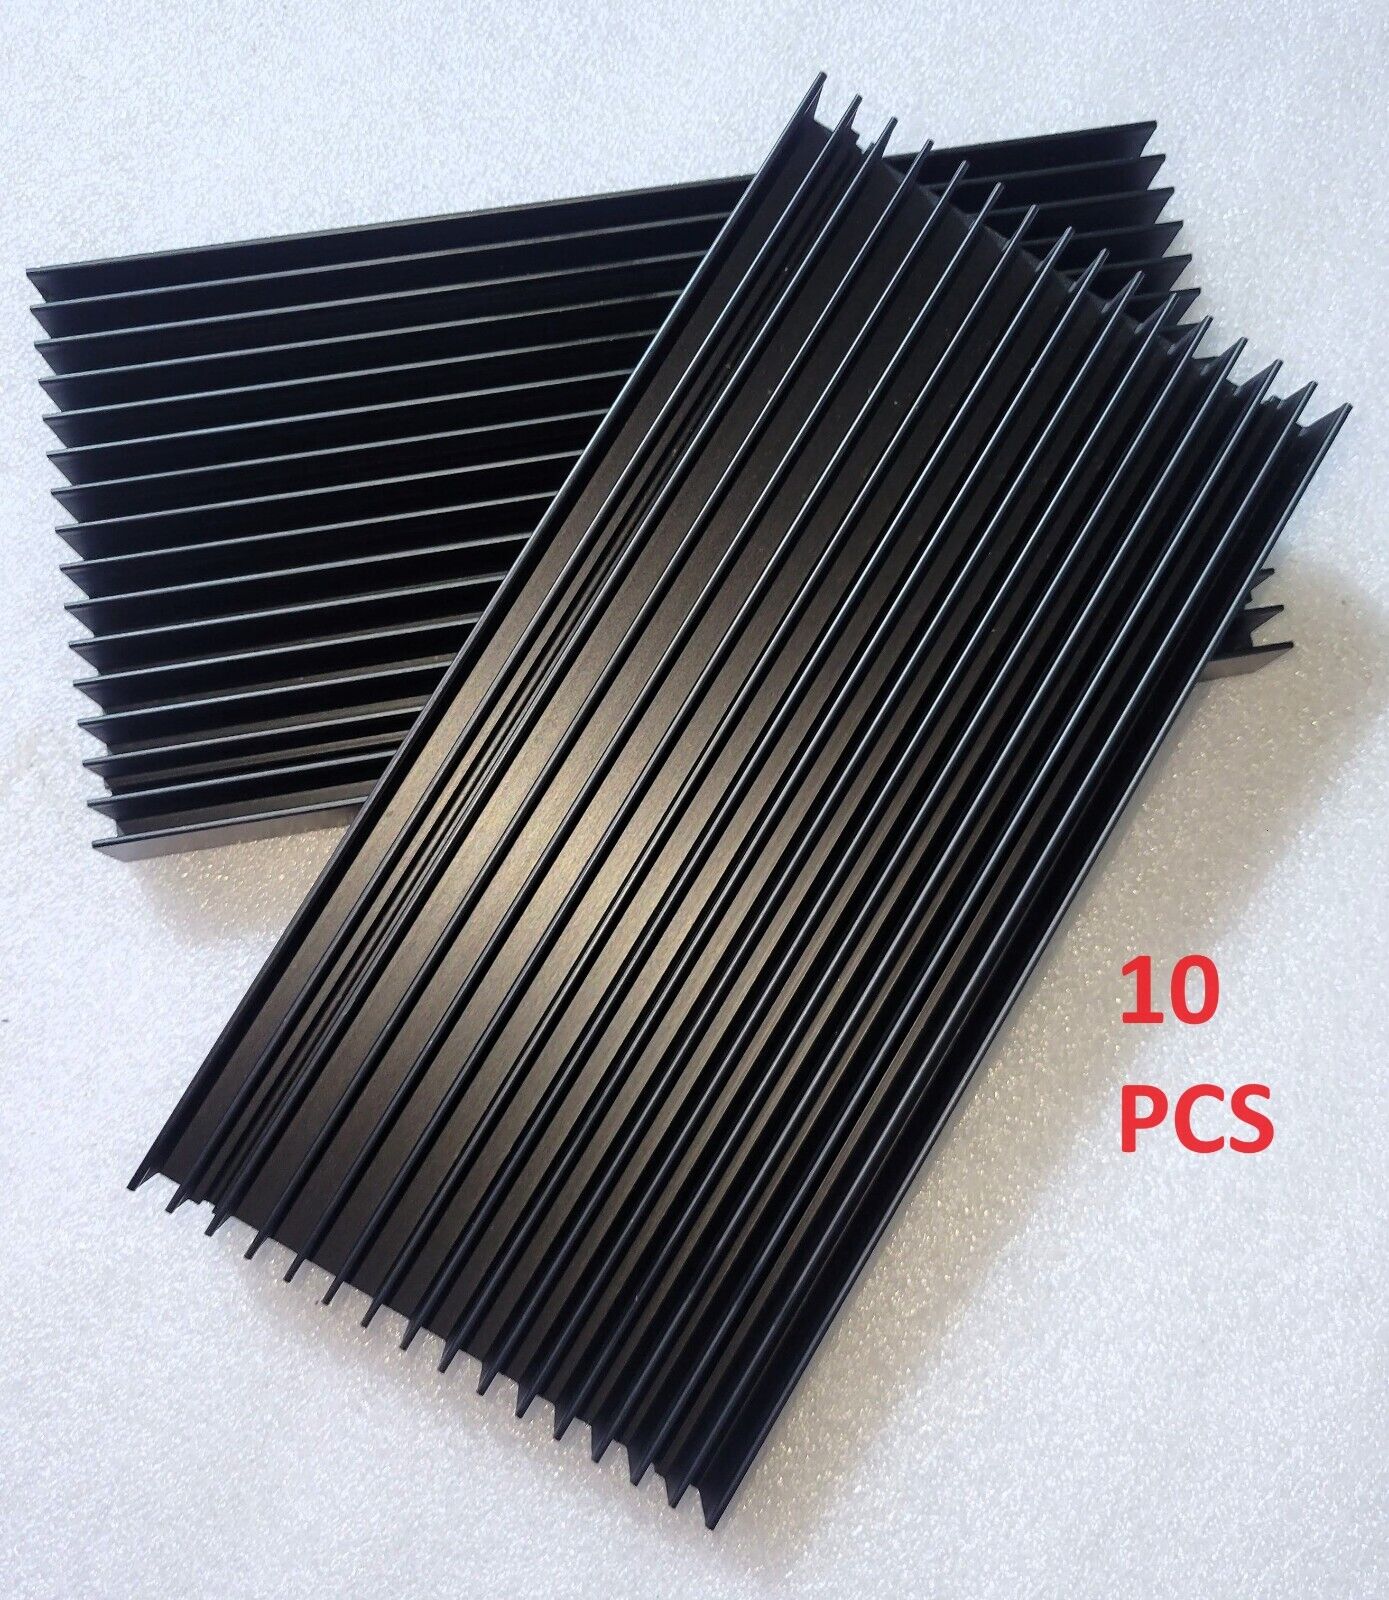 10pcs 200x100x18mm Large Black Anodized Aluminum Heatsink Cooler For LED Cooling